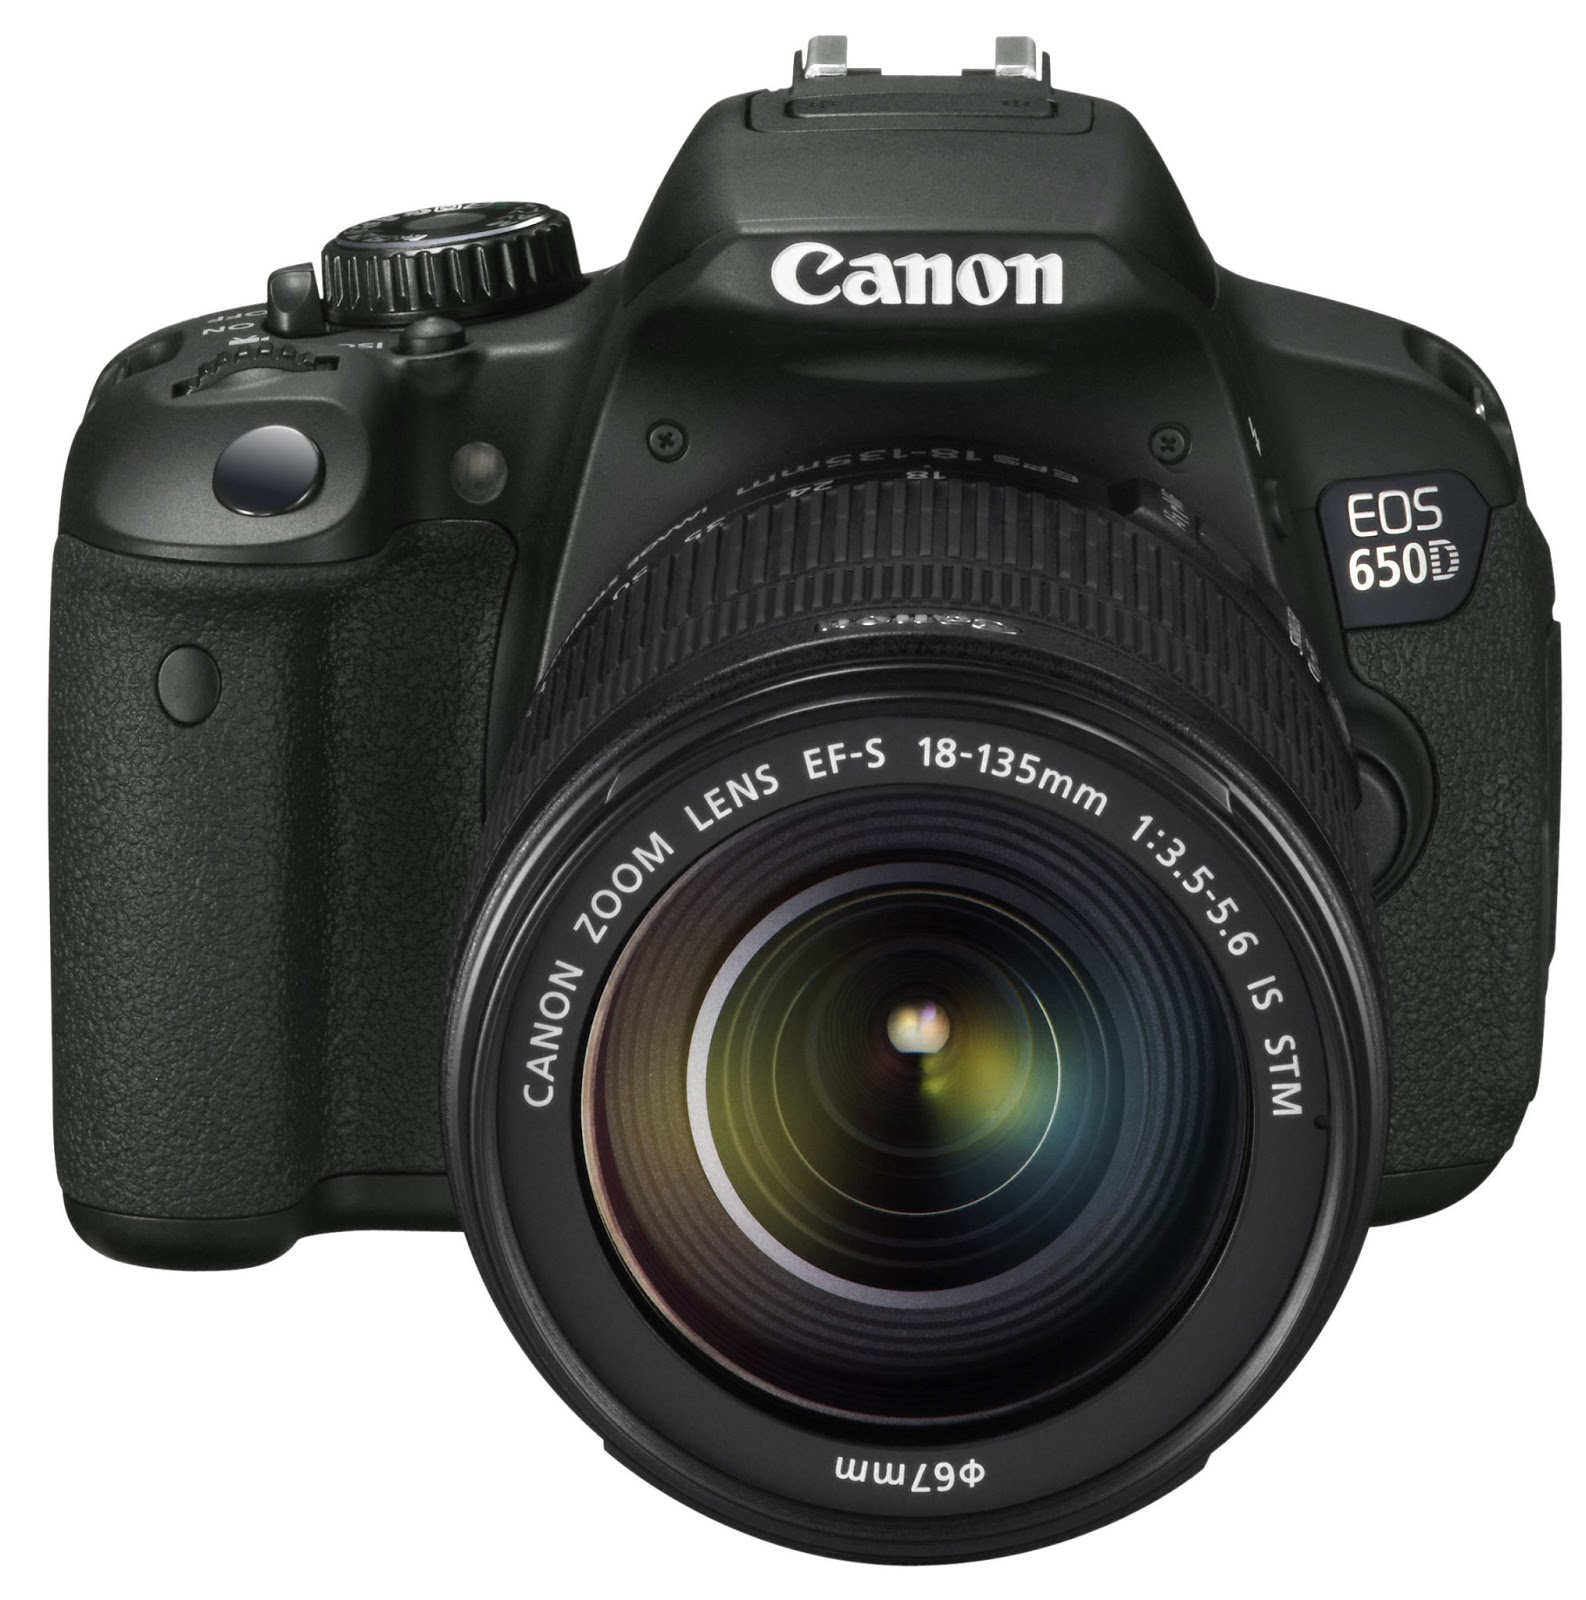 Harga Kamera Canon EOS 650D Update 2016 Dan Spesifikasi 